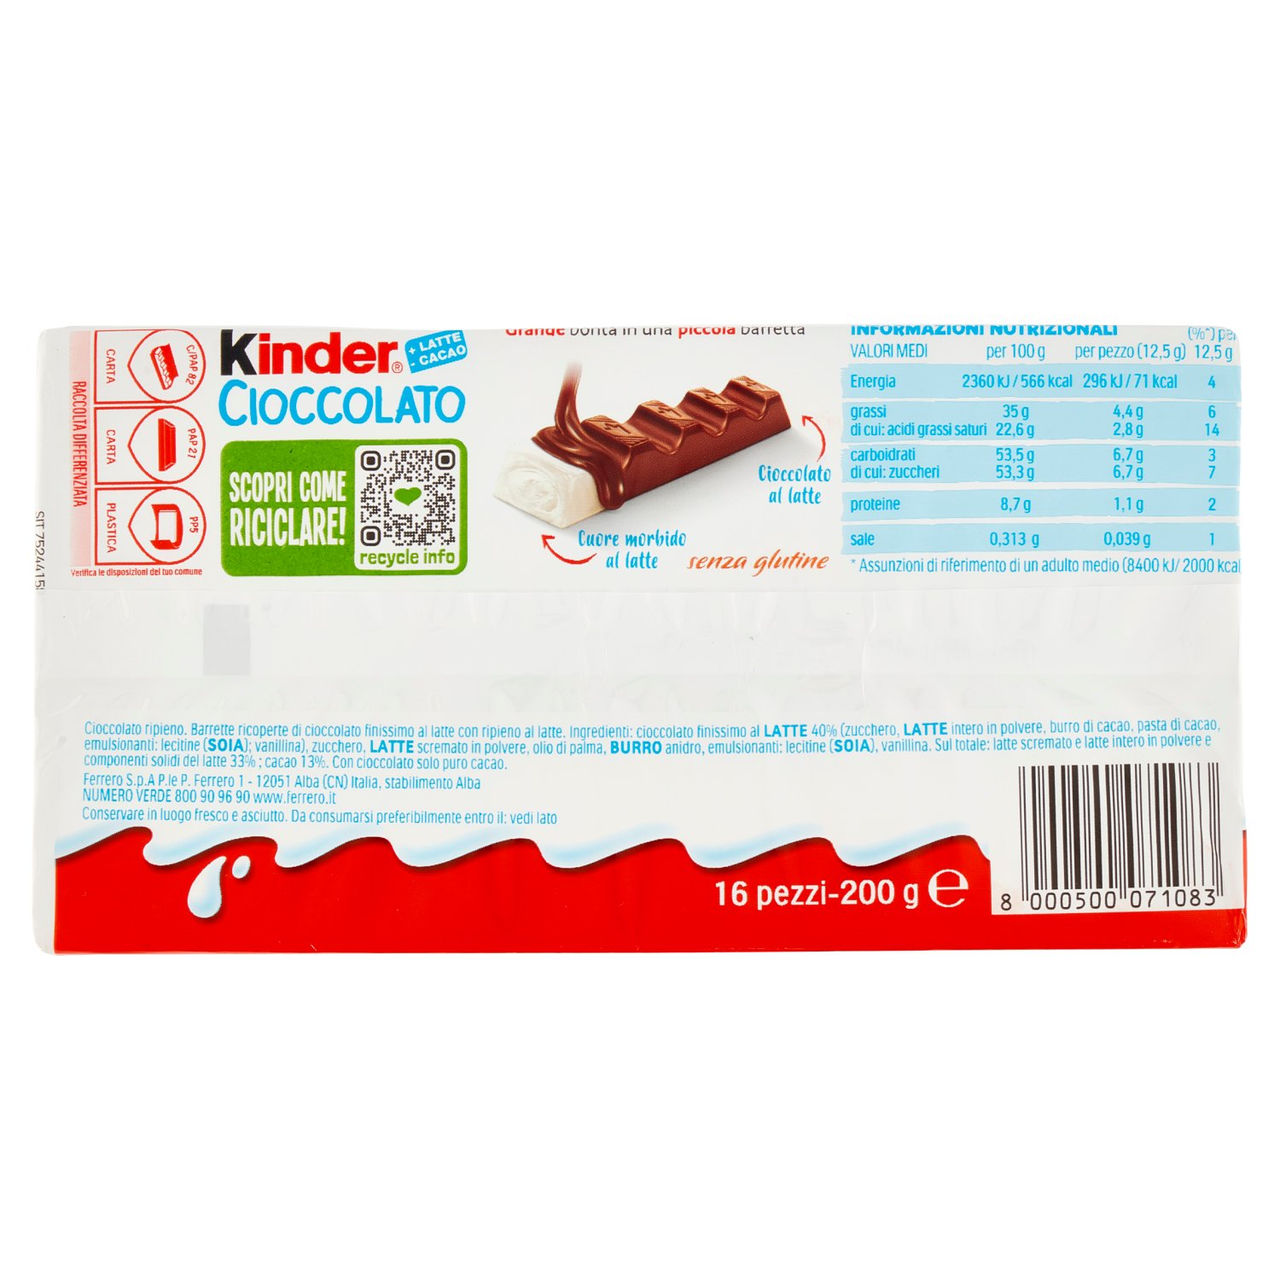 Kinder Cioccolato 16 x 12,5 g in vendita online